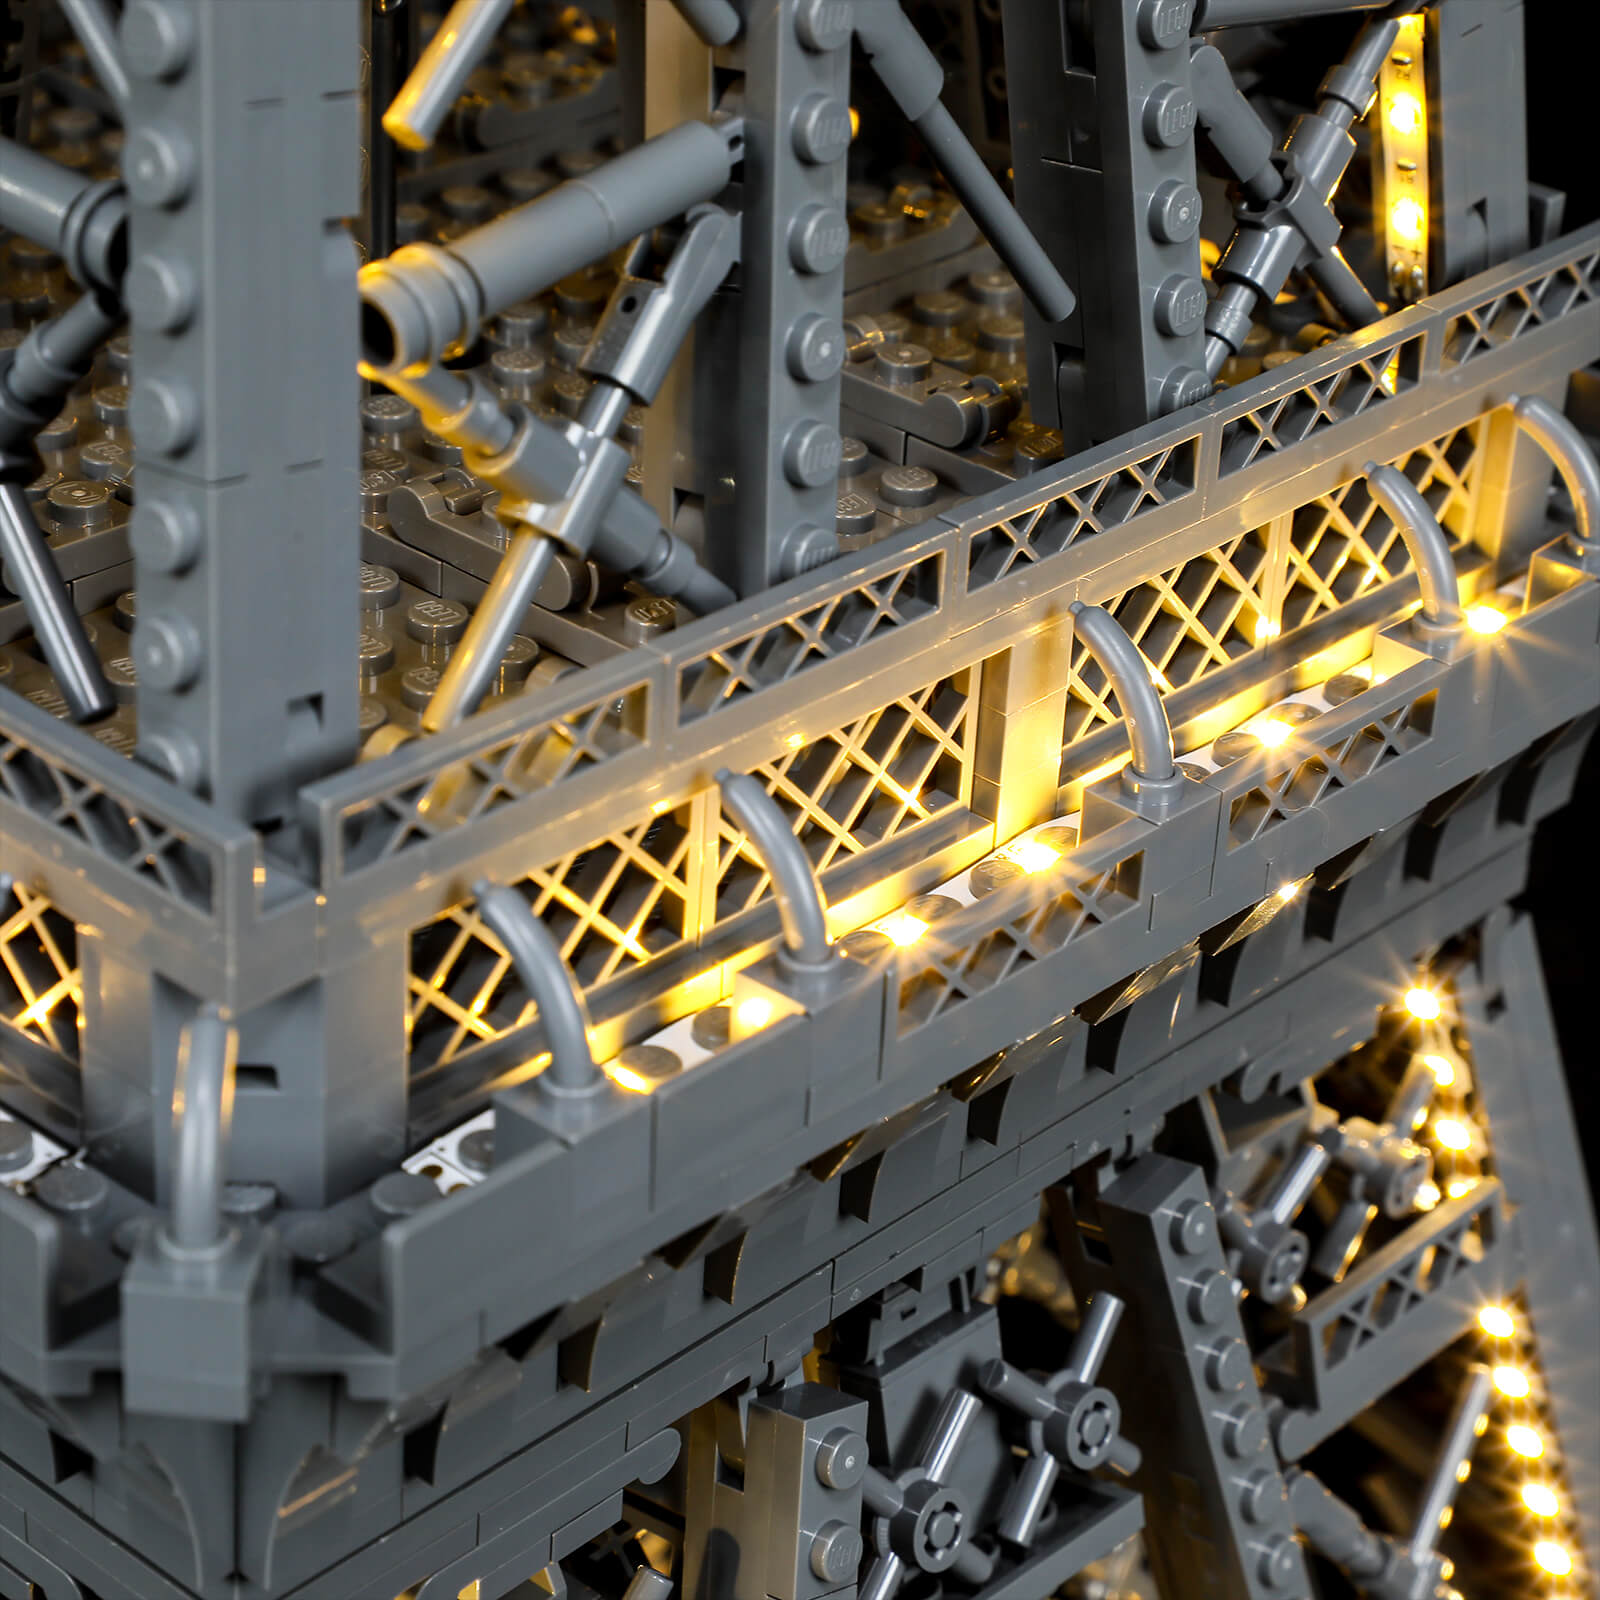 Eiffel Tower 10307 Lego light kit review